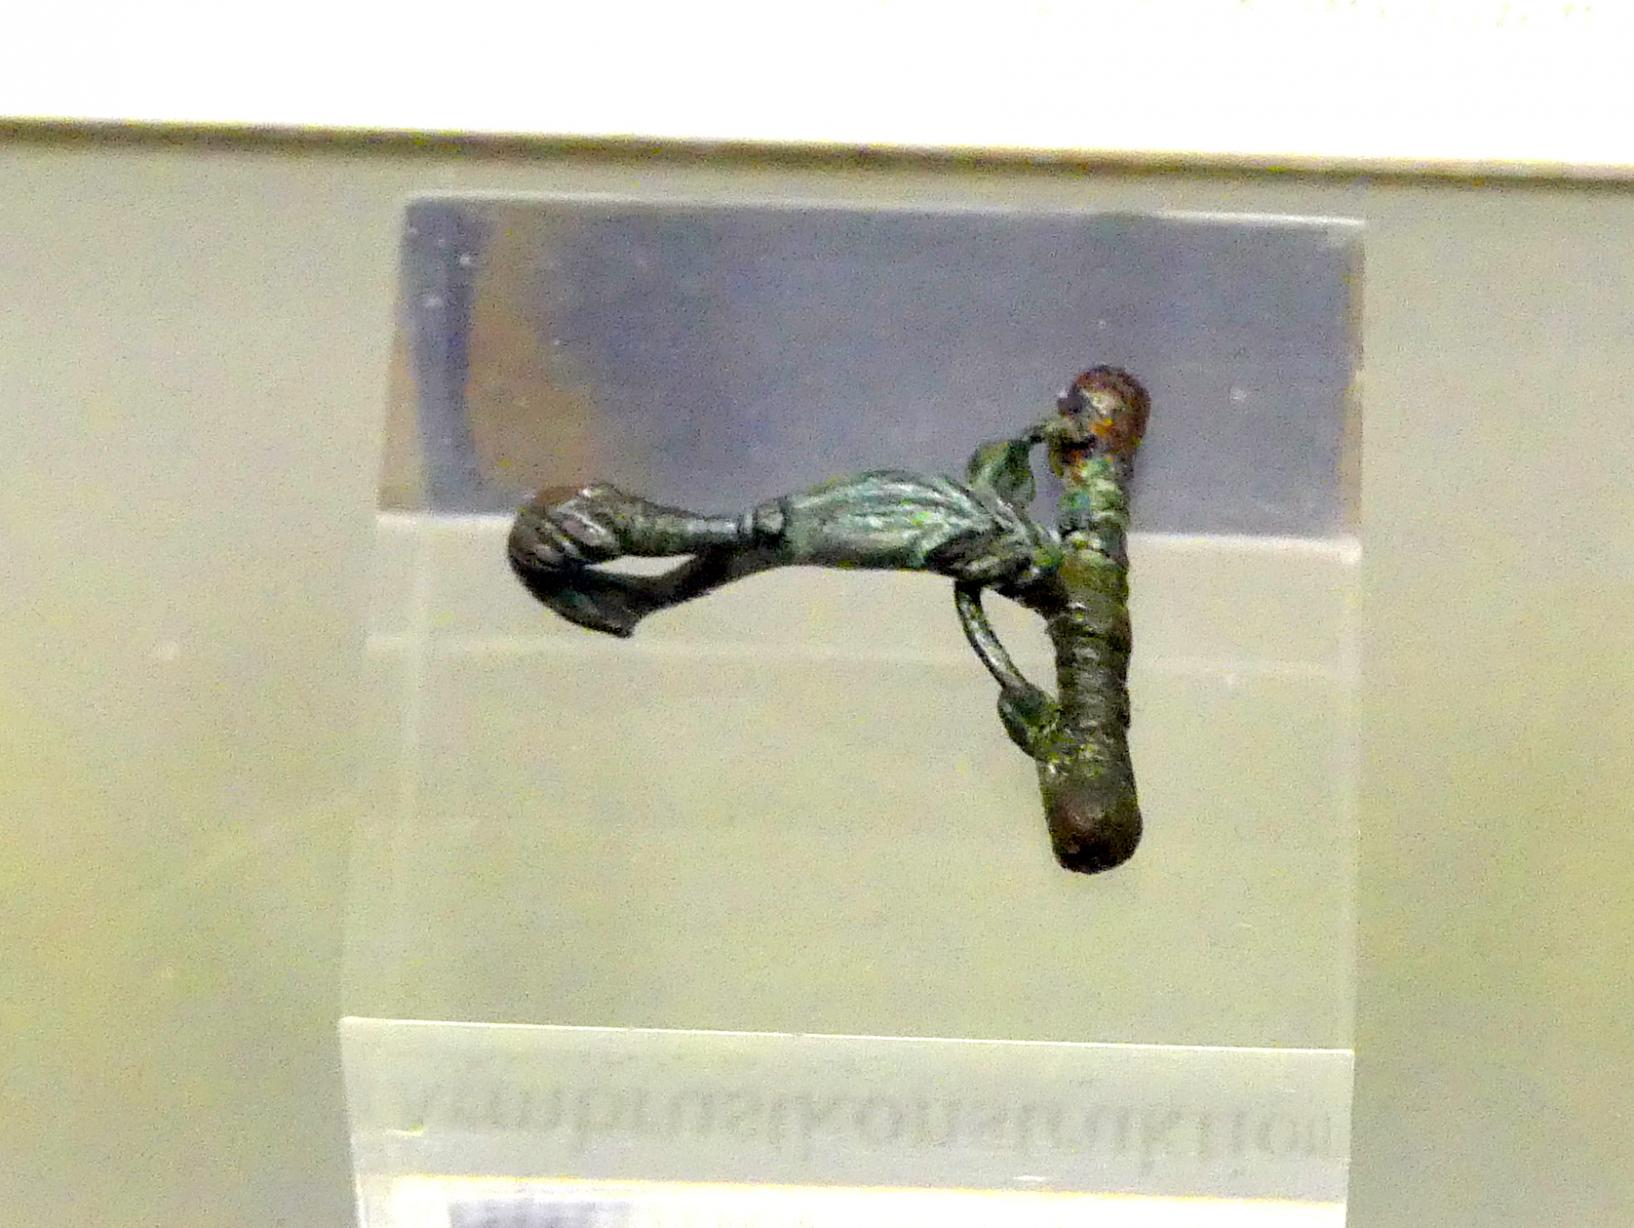 Tierkopffibel mit Armbrustkonstruktion, Frühlatènezeit A, 700 - 100 v. Chr., Bild 1/2